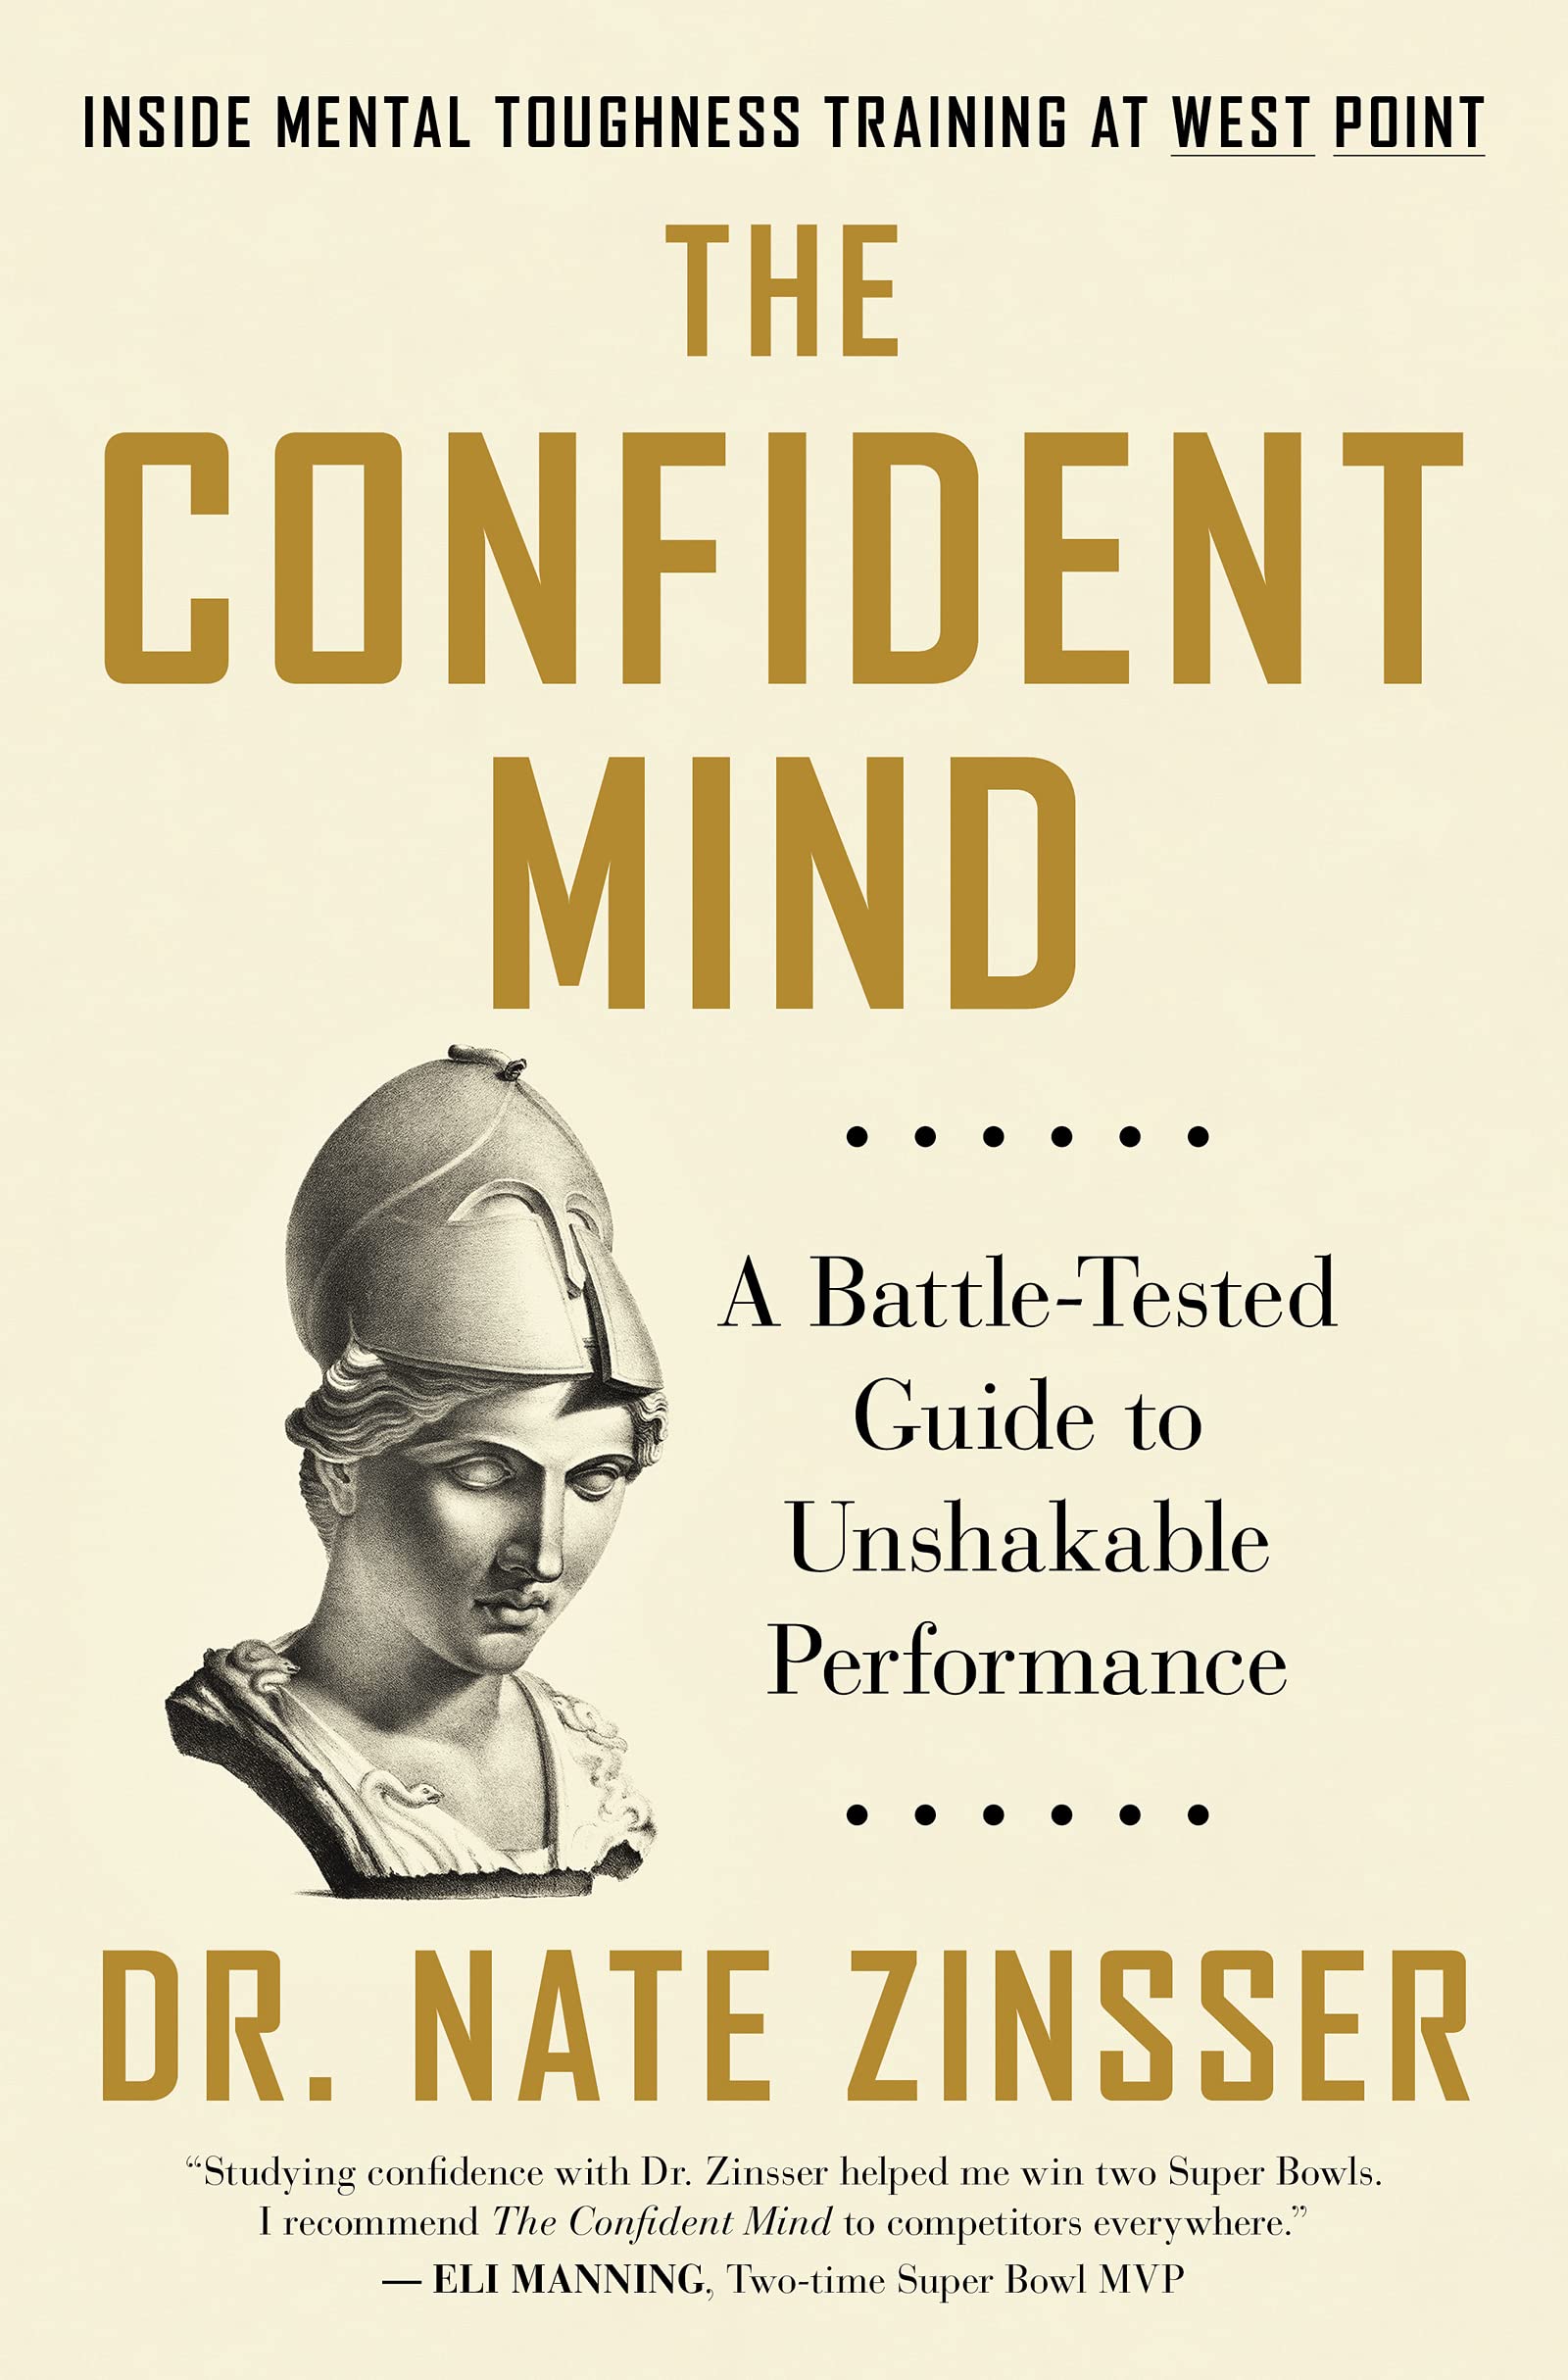 THE CONFIDENT MIND BY DR. NATE ZINSSER